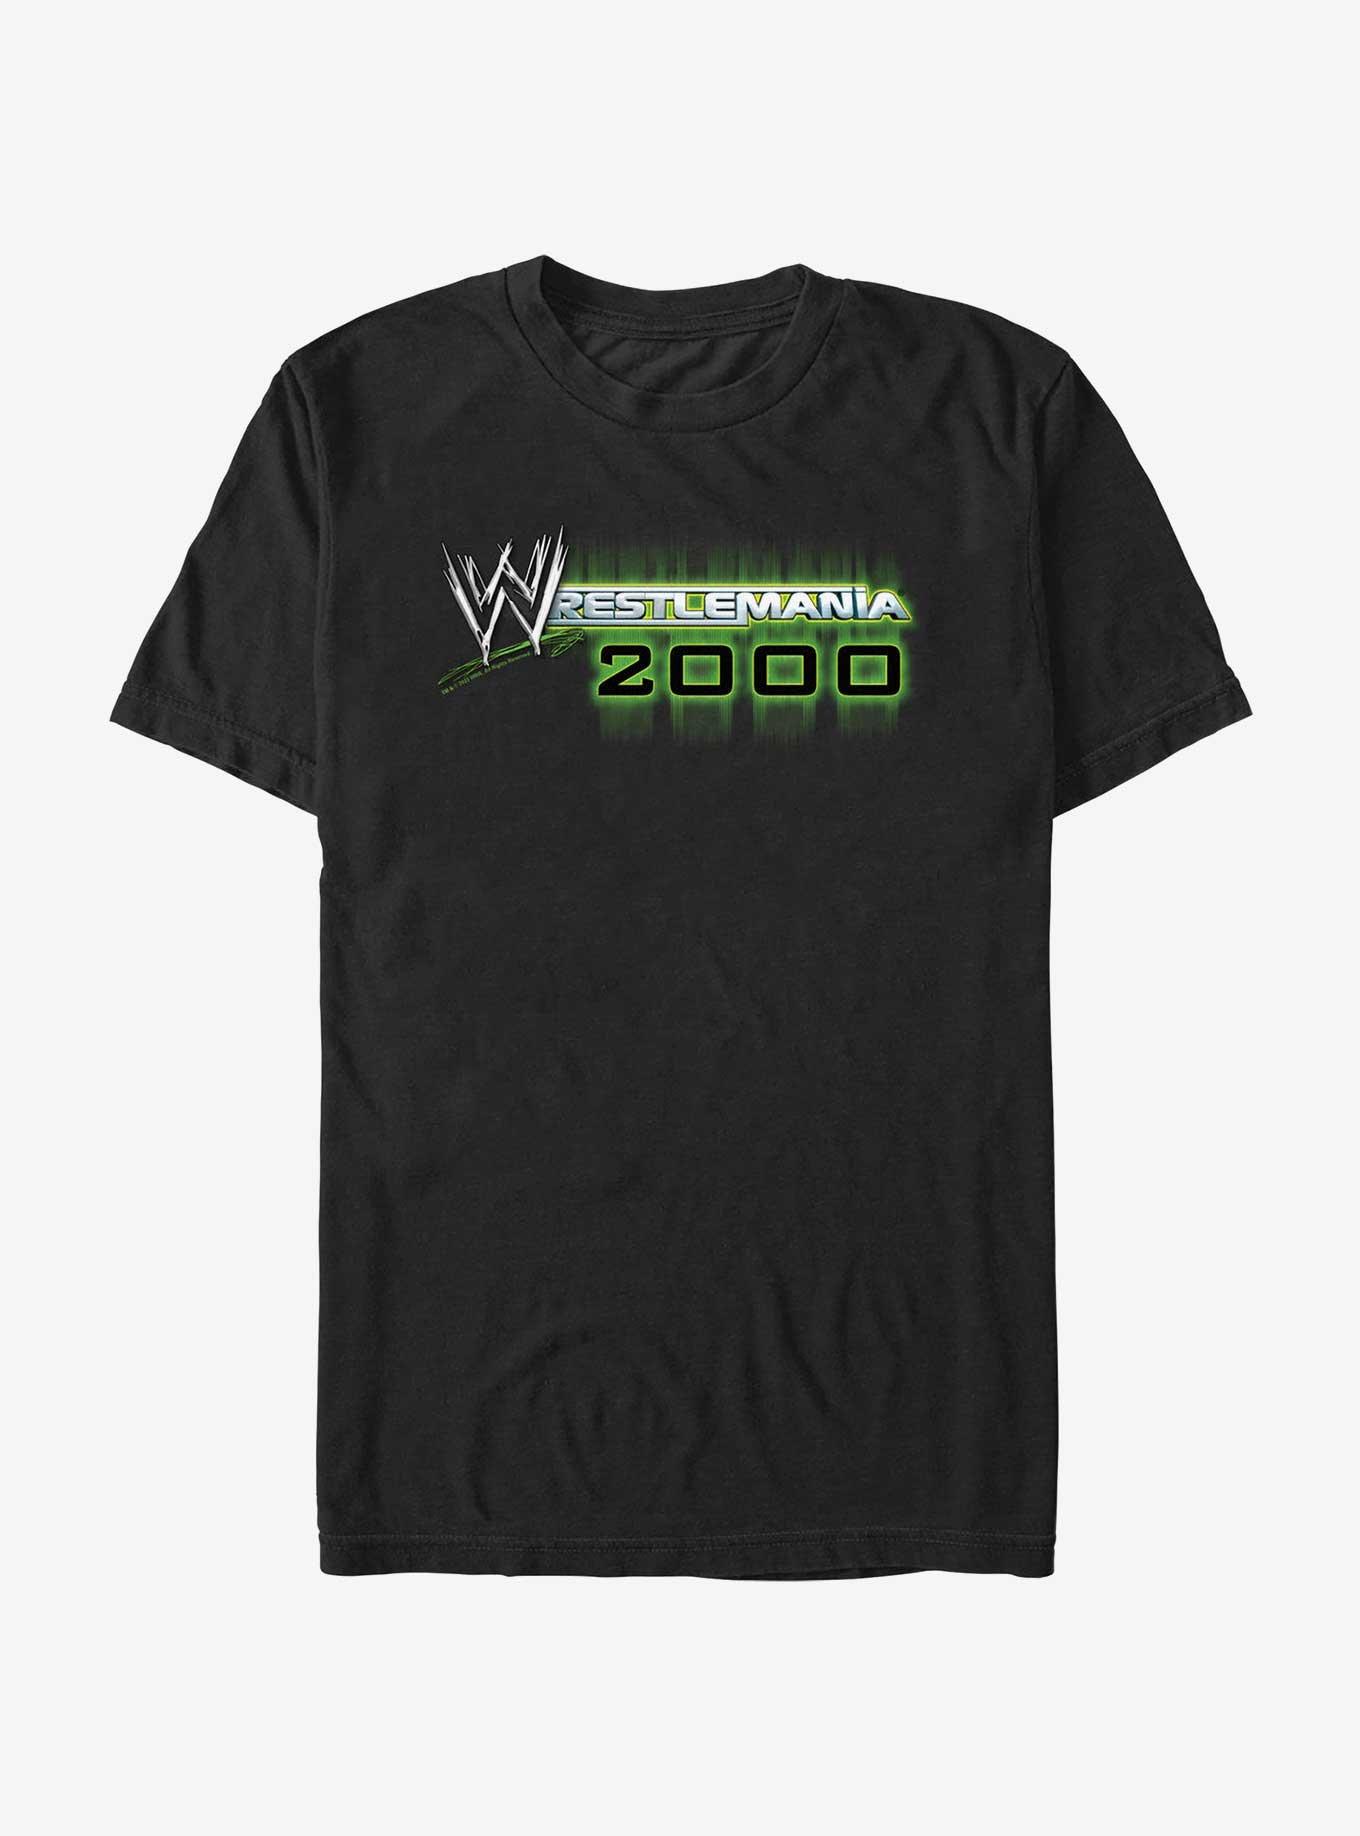 WWE WrestleMania 2000 Logo T-Shirt, , hi-res